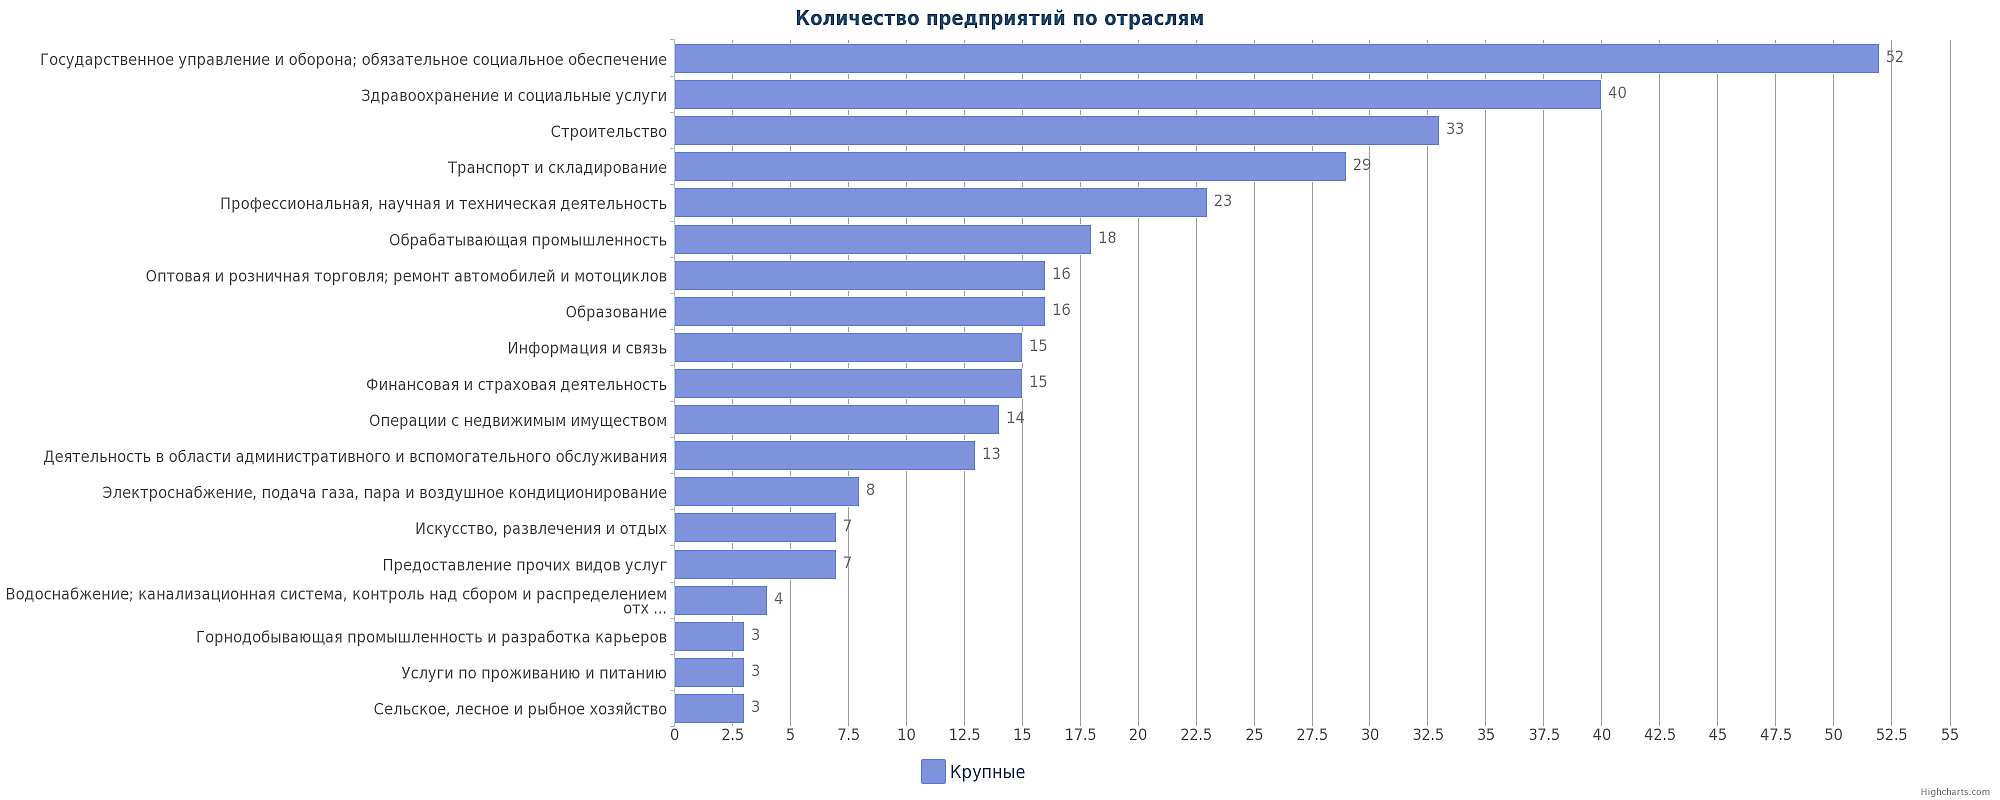 Крупные предприятия Казахстана по отраслям: Астана